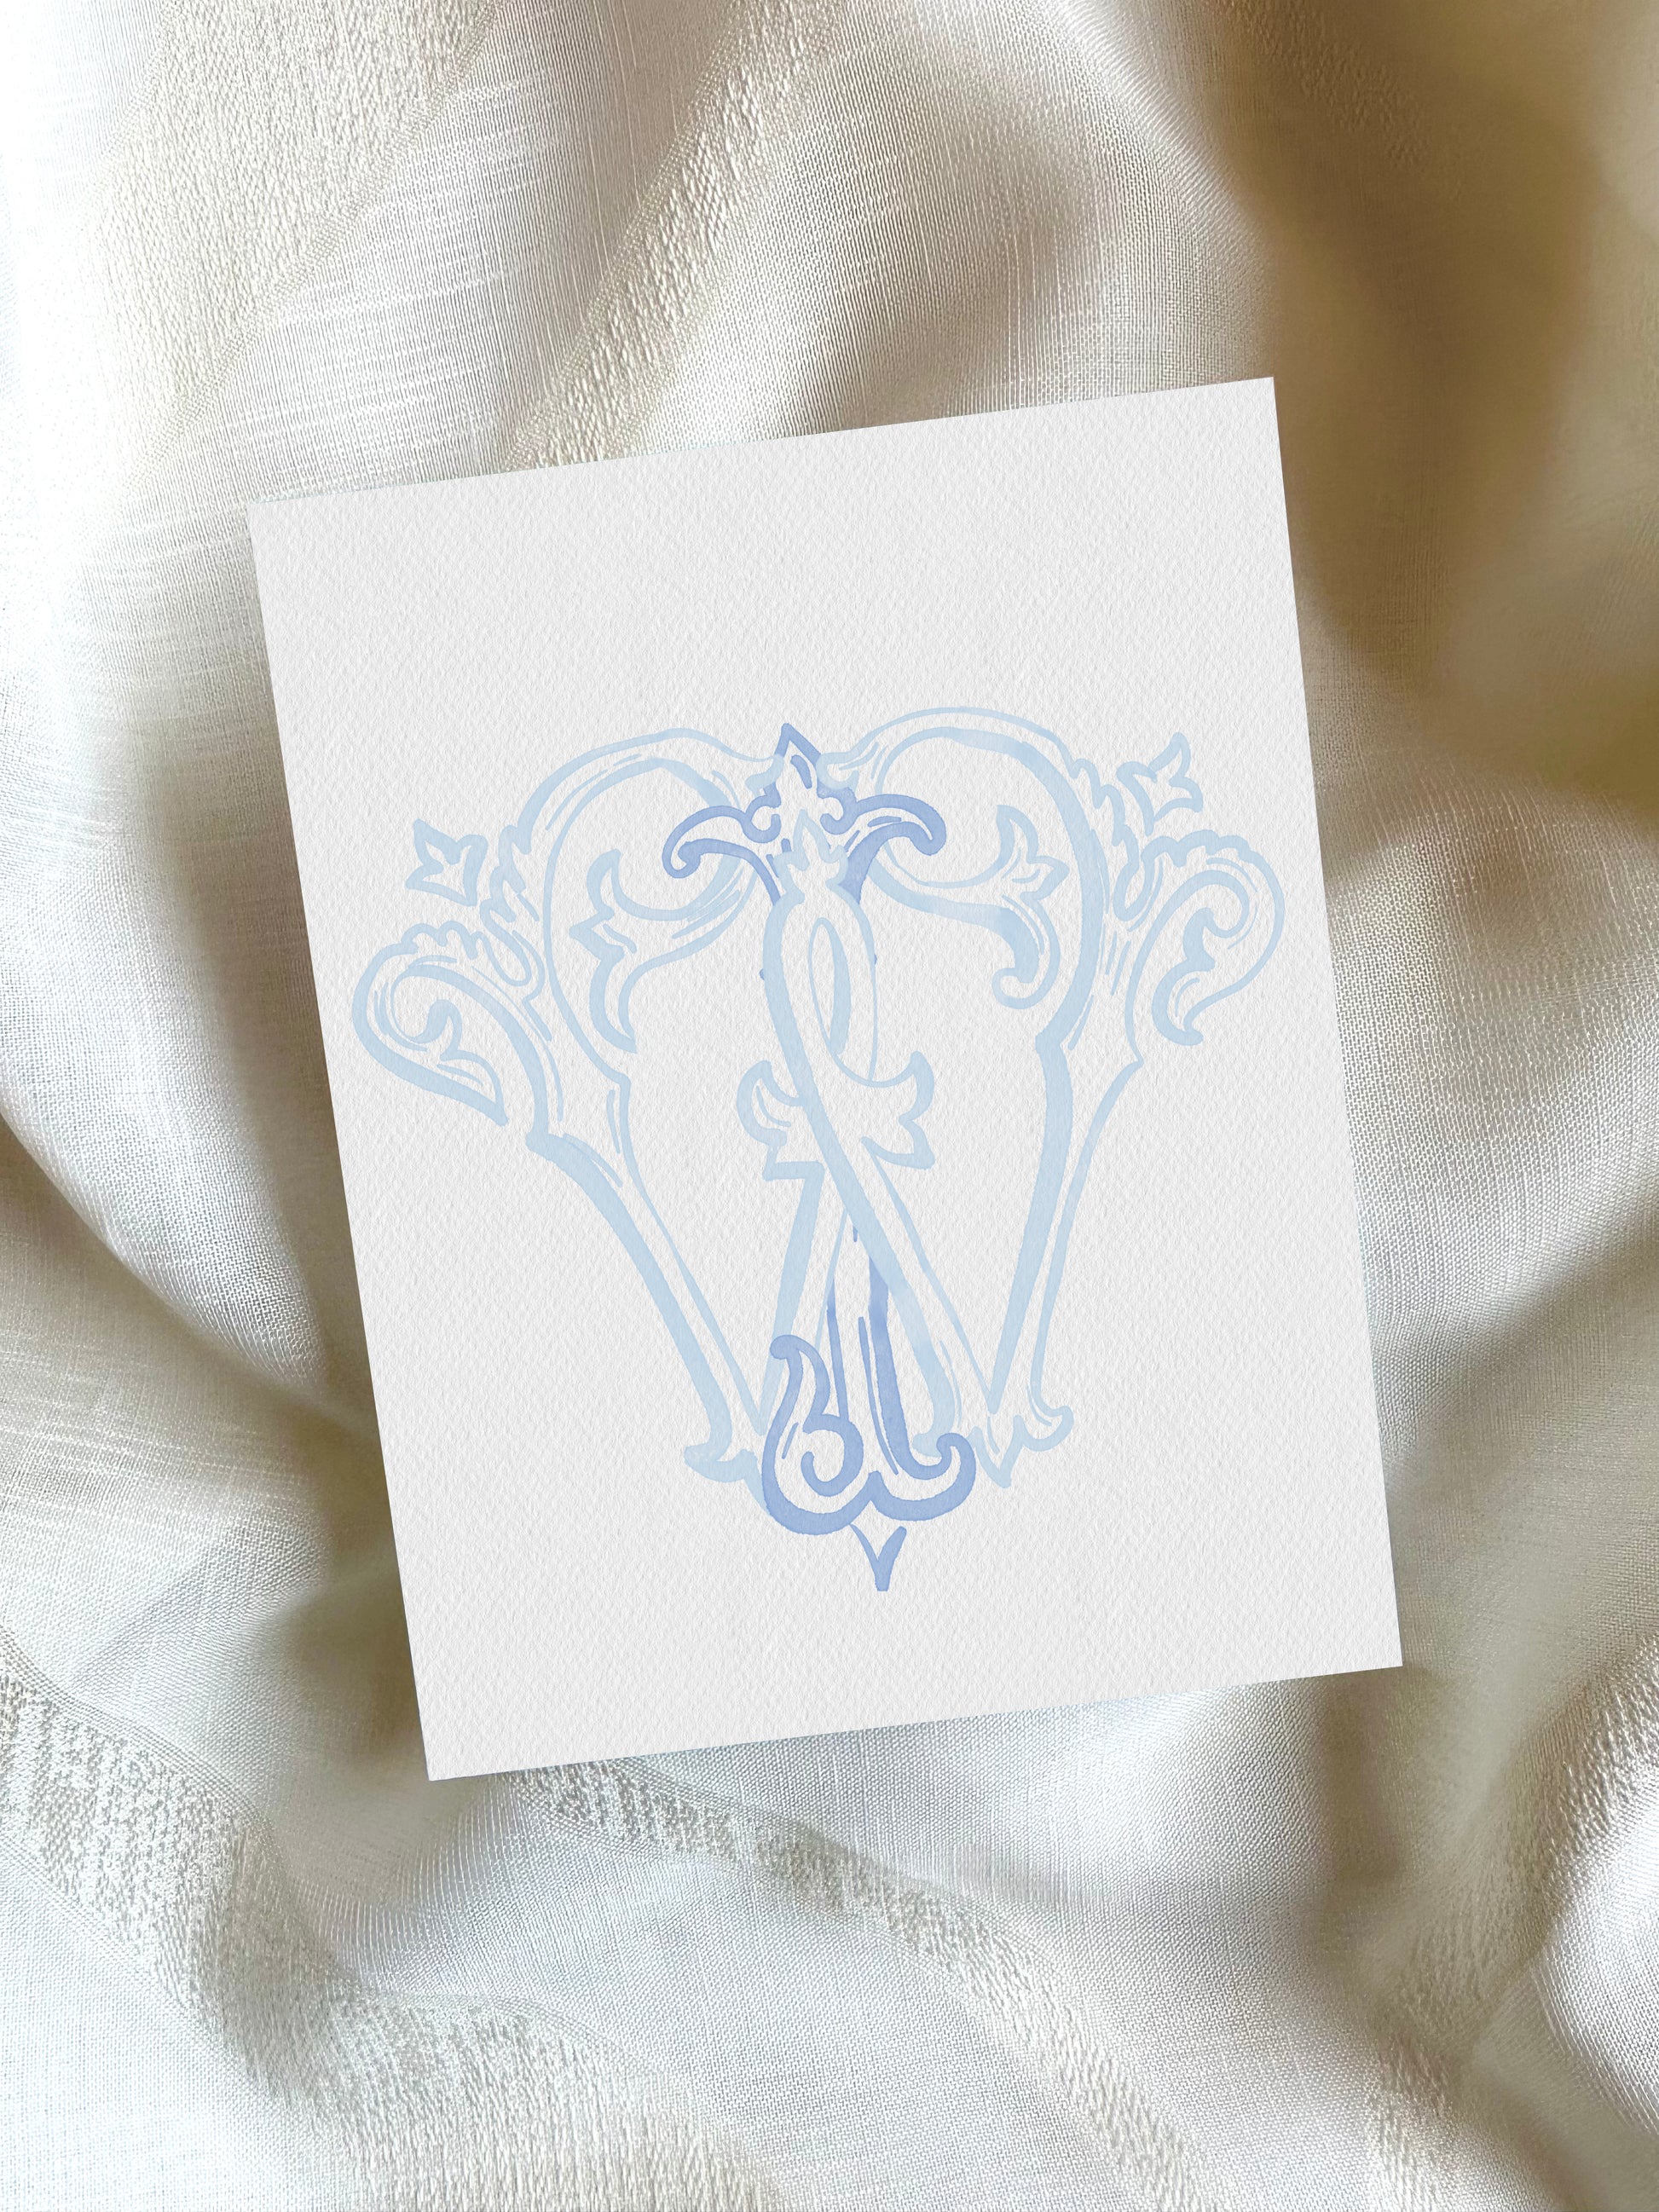 2 Letter Monogram with Letters IW WI | Digital Download - Wedding Monogram SVG, Personal Logo, Wedding Logo for Wedding Invitations The Wedding Crest Lab